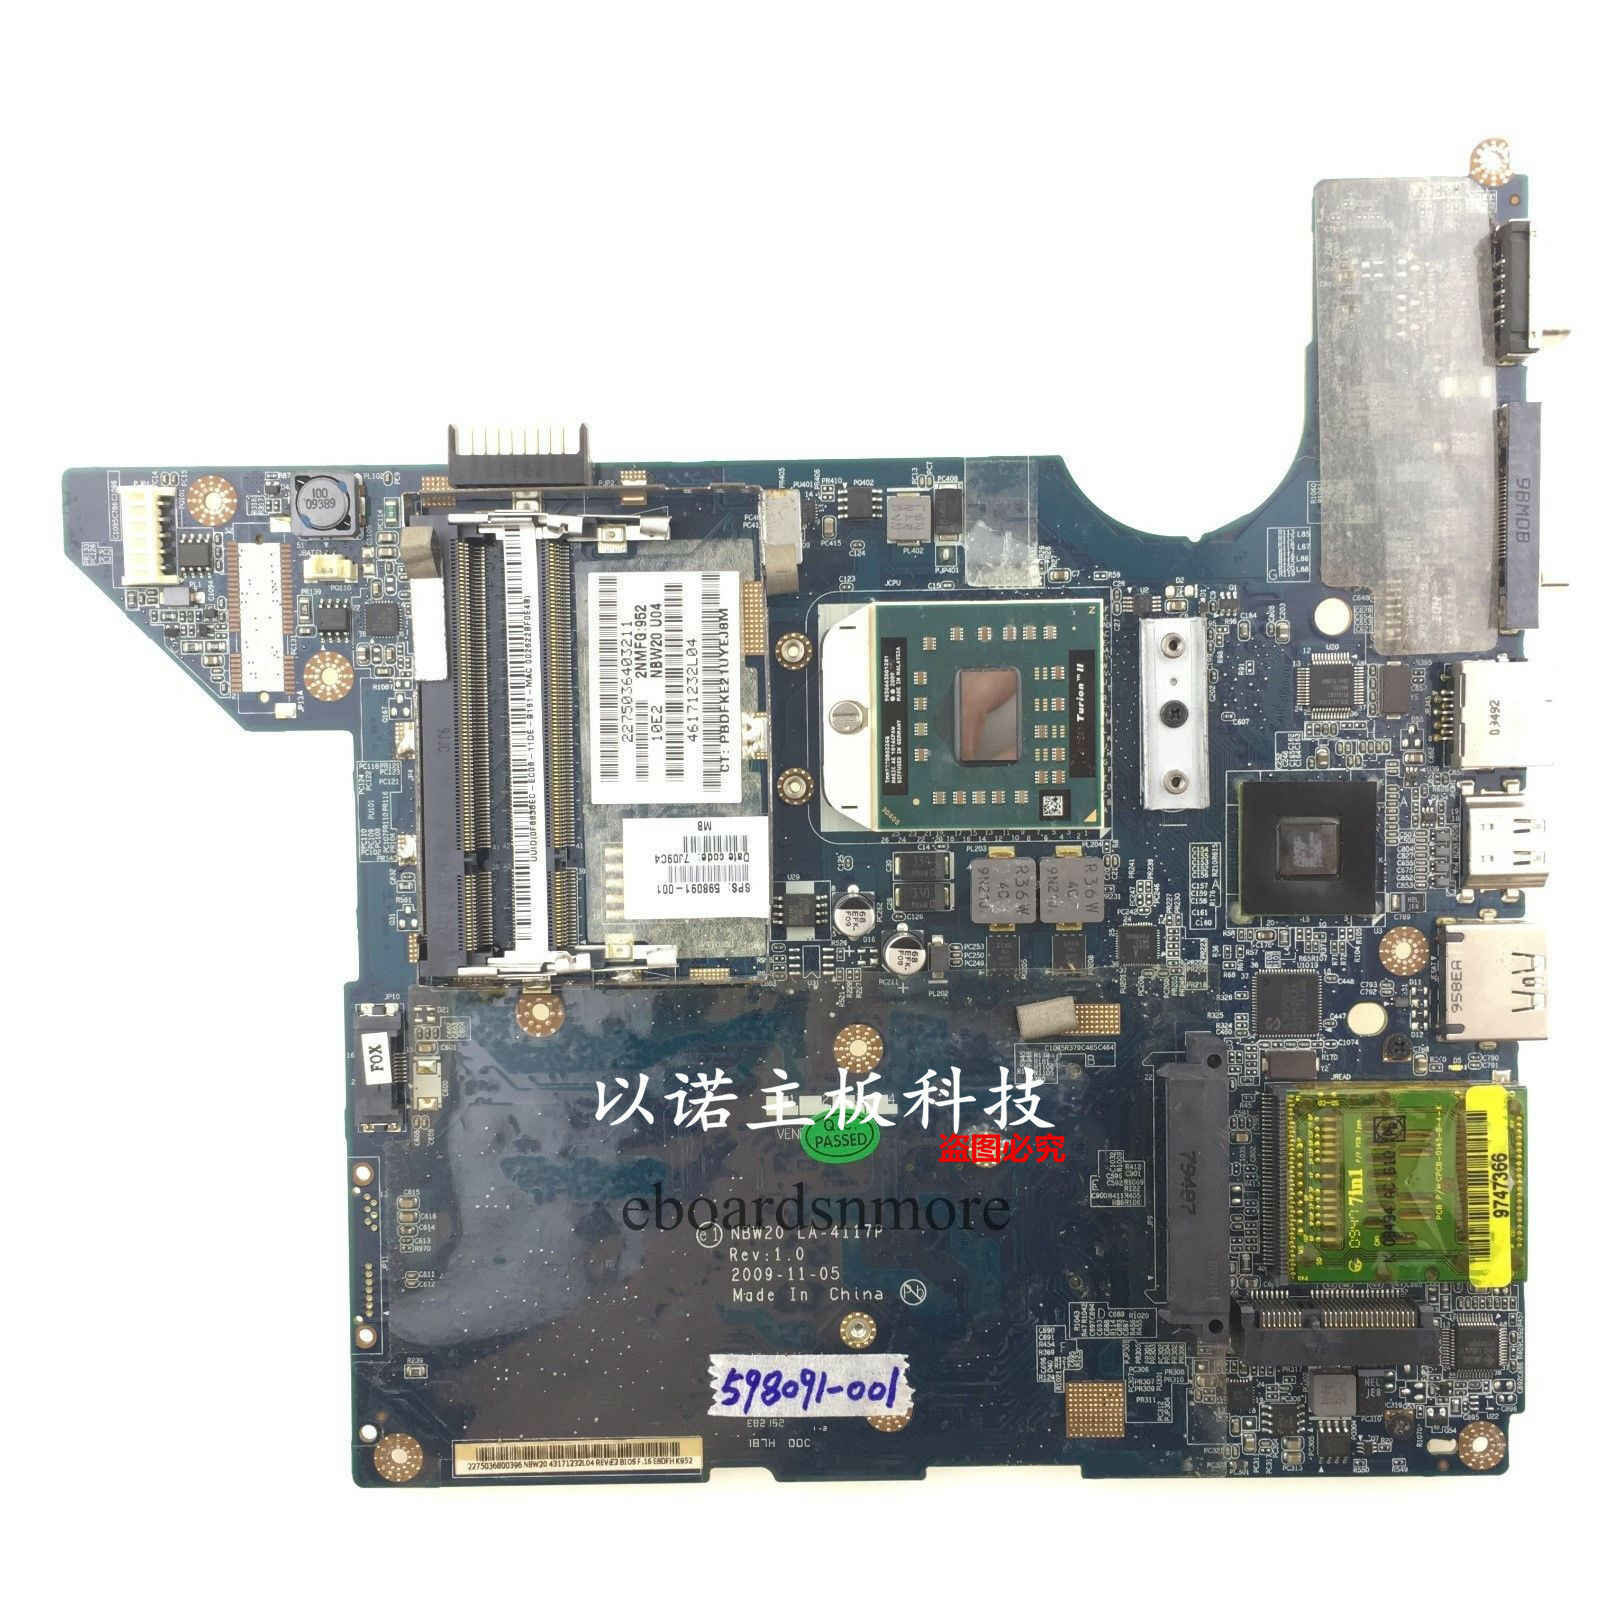 598091-001 AMD MOTHERBOARD for HP PAVILION DV4-2000 SERIES LAPTOP LA-4117P EXC Brand: HP MPN: 598091-001